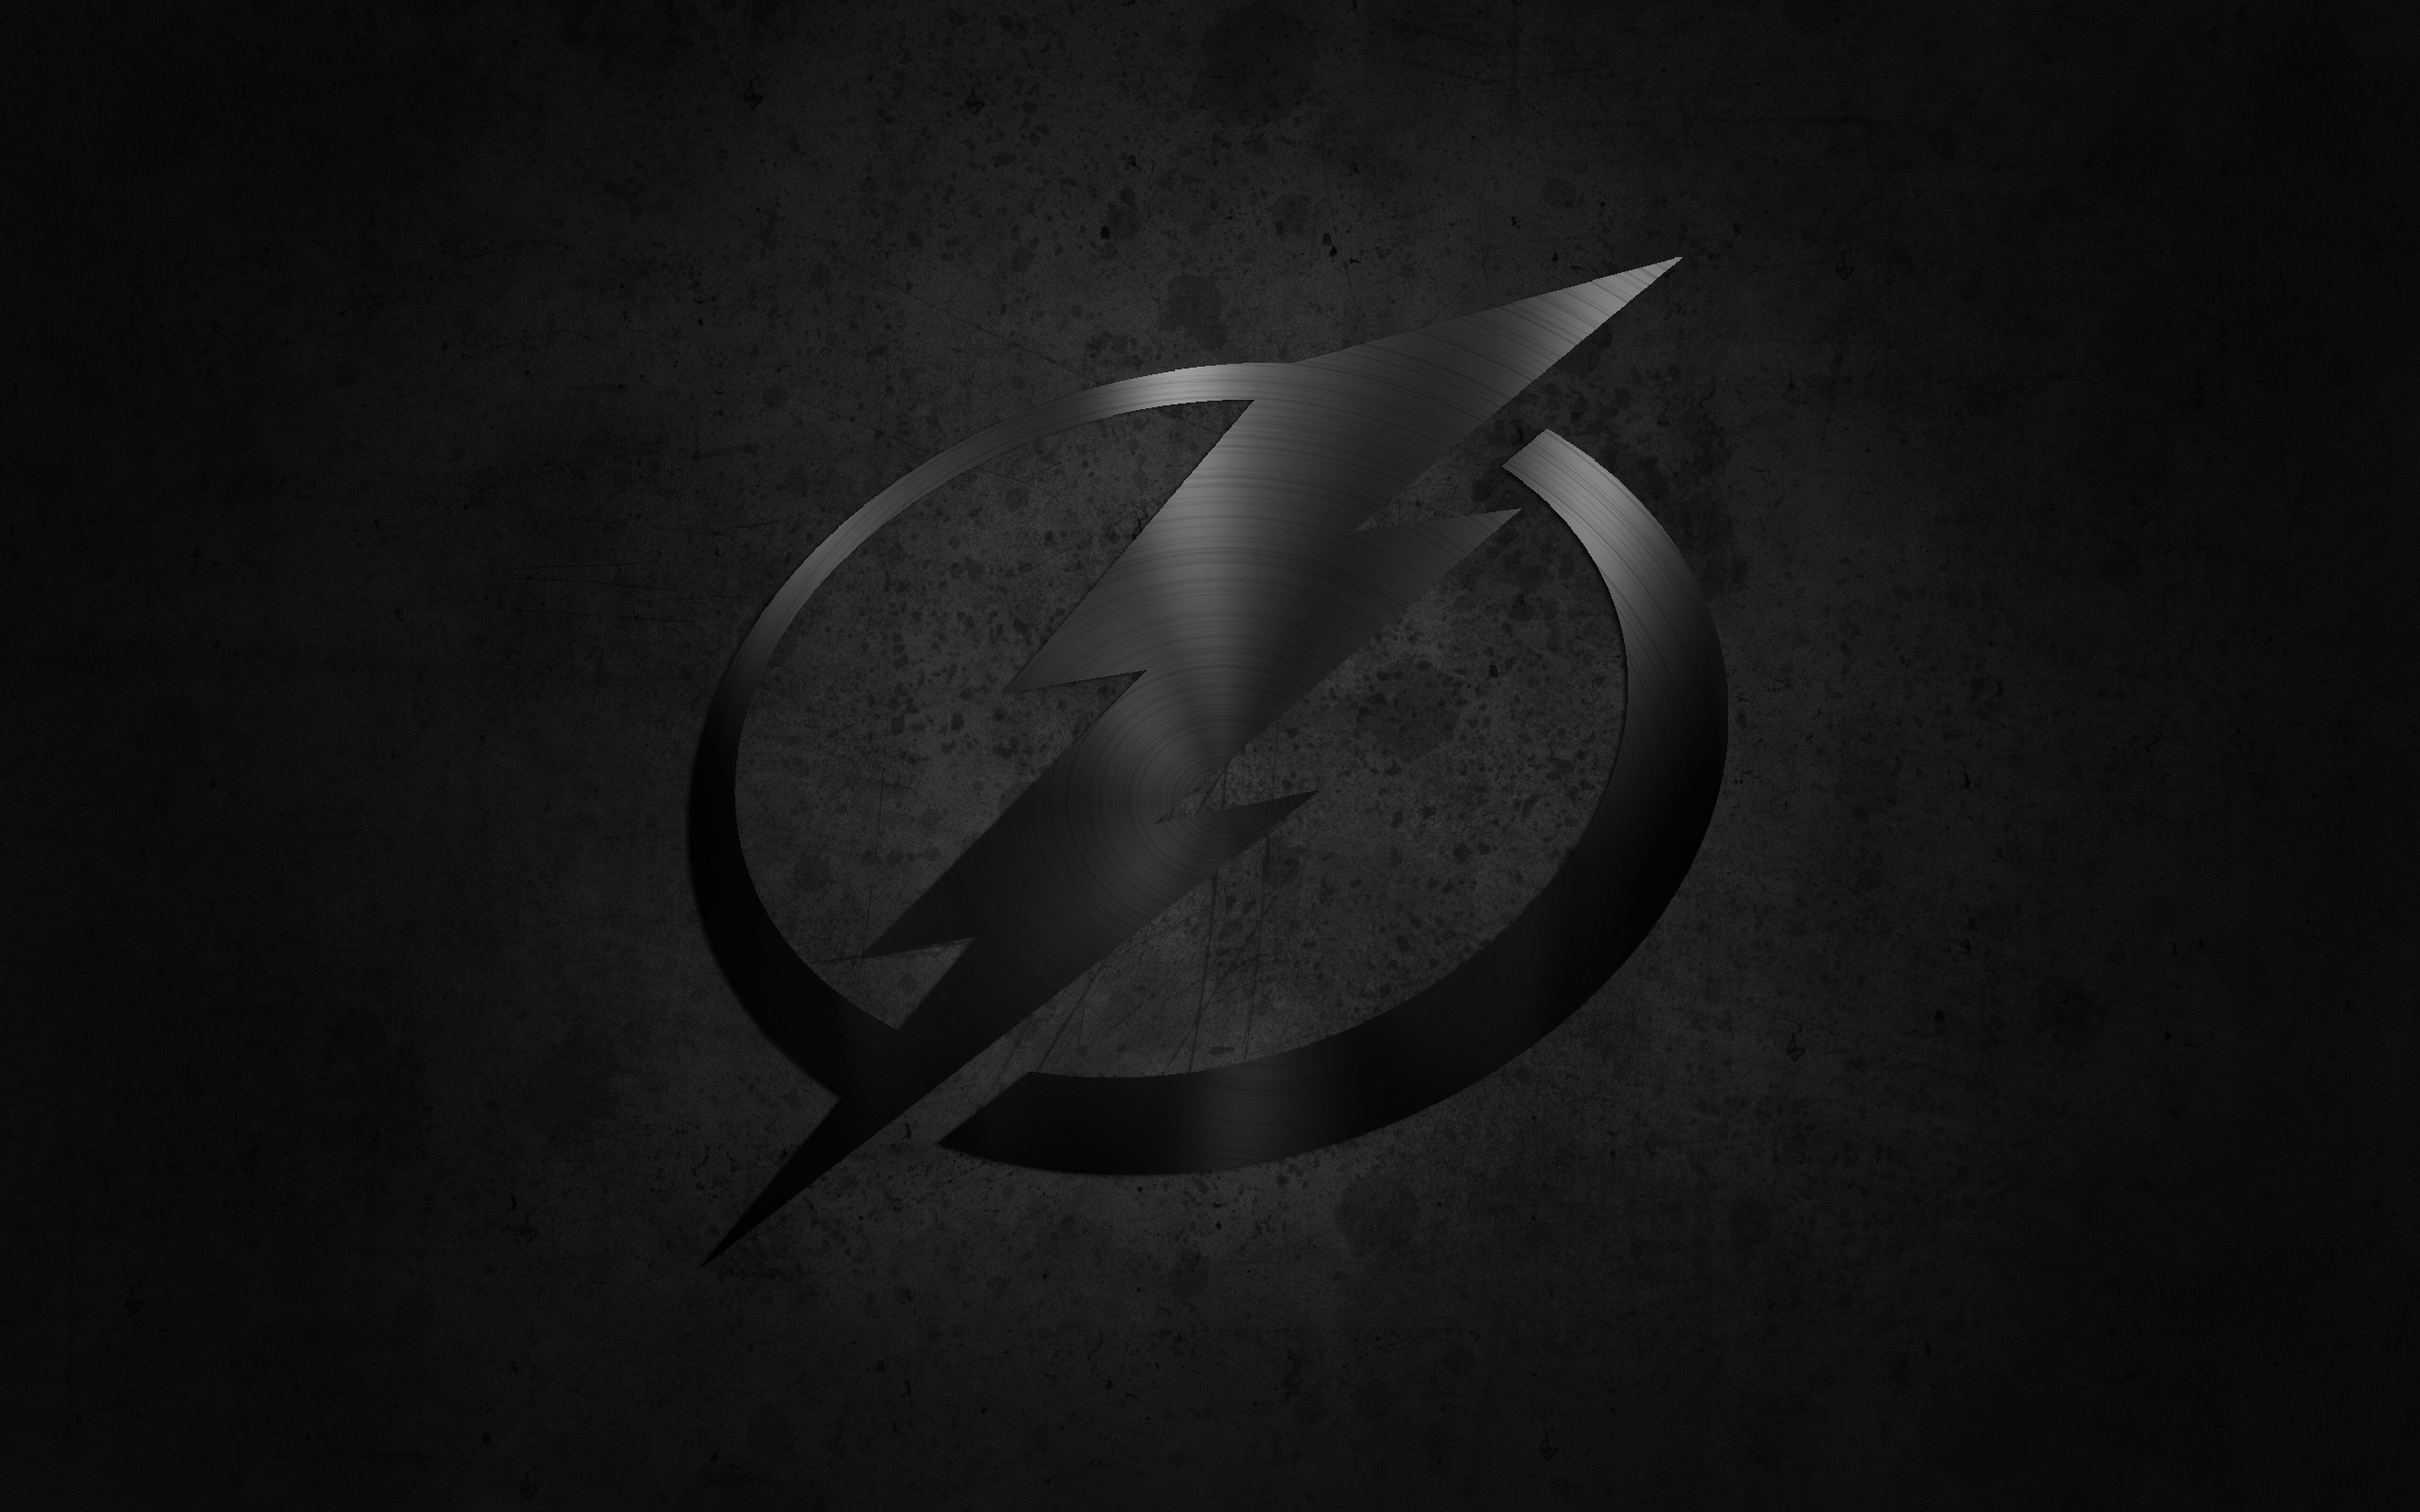 Got bored at work and made a Lightning logo wallpaper